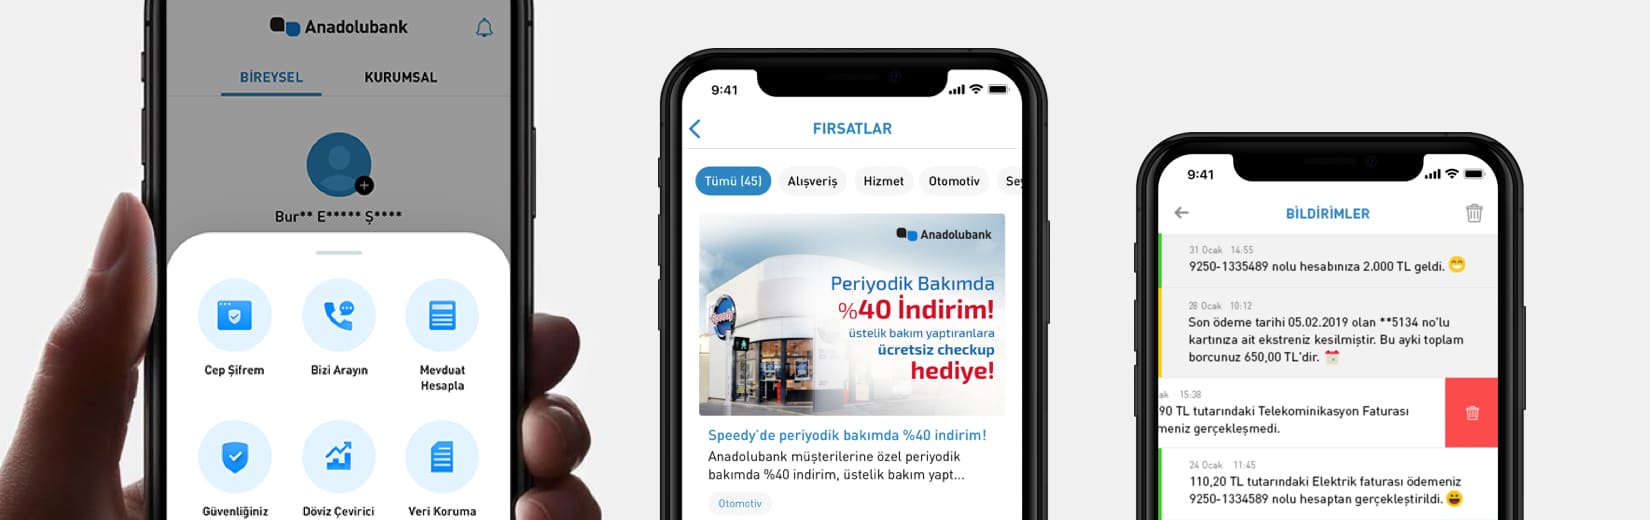 Anadolubank Mobil